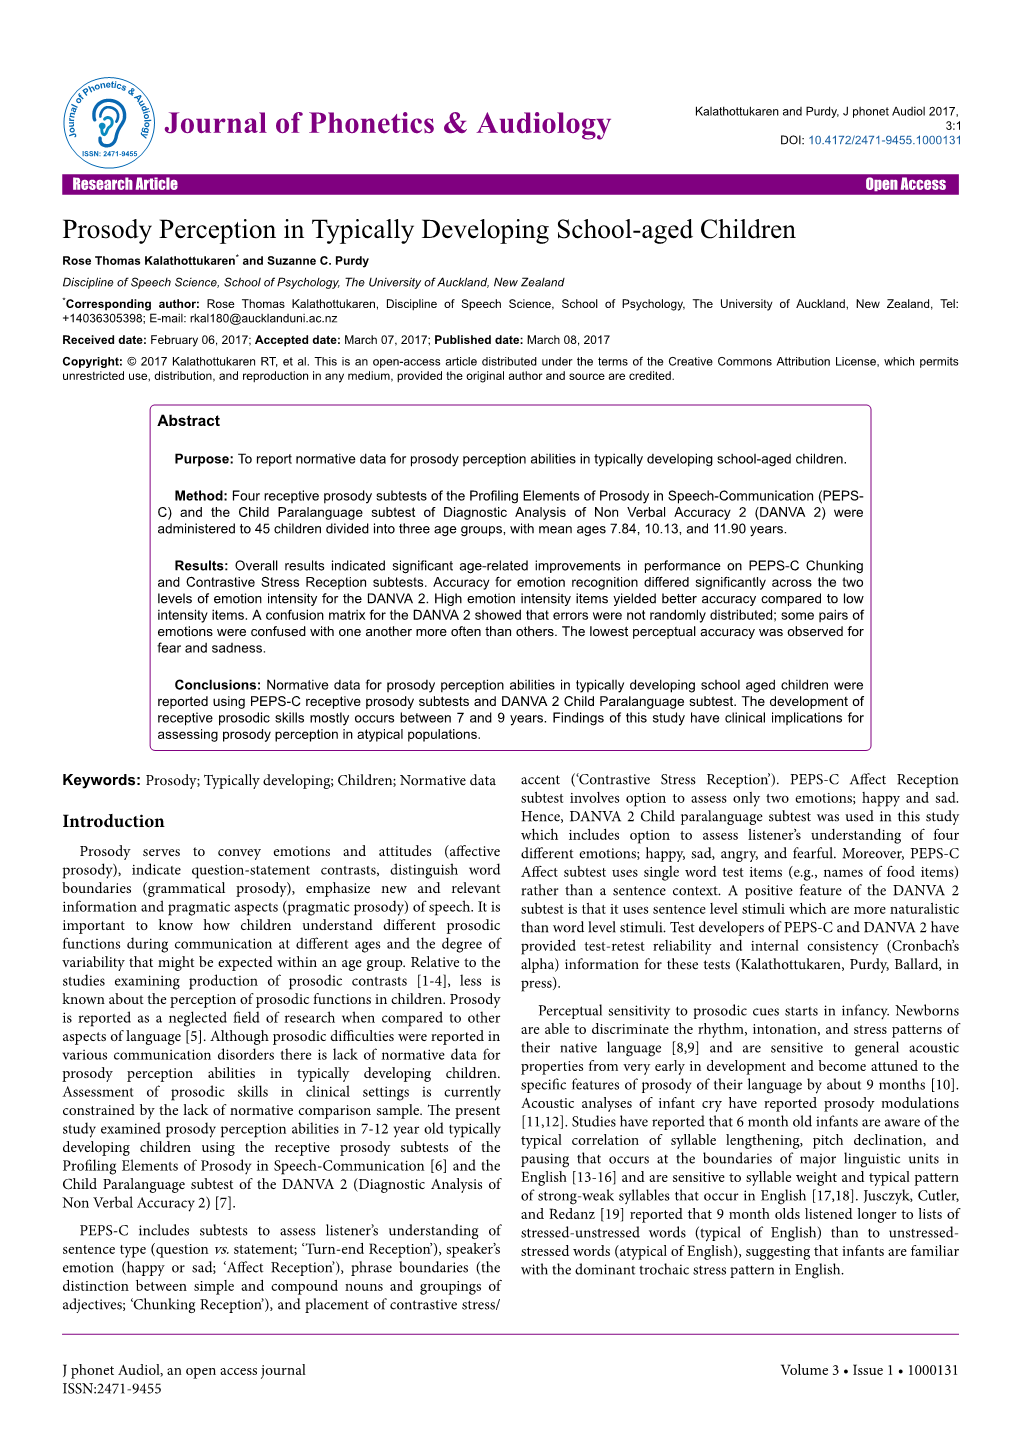 Prosody Perception in Typically Developing School-Aged Children Rose Thomas Kalathottukaren* and Suzanne C